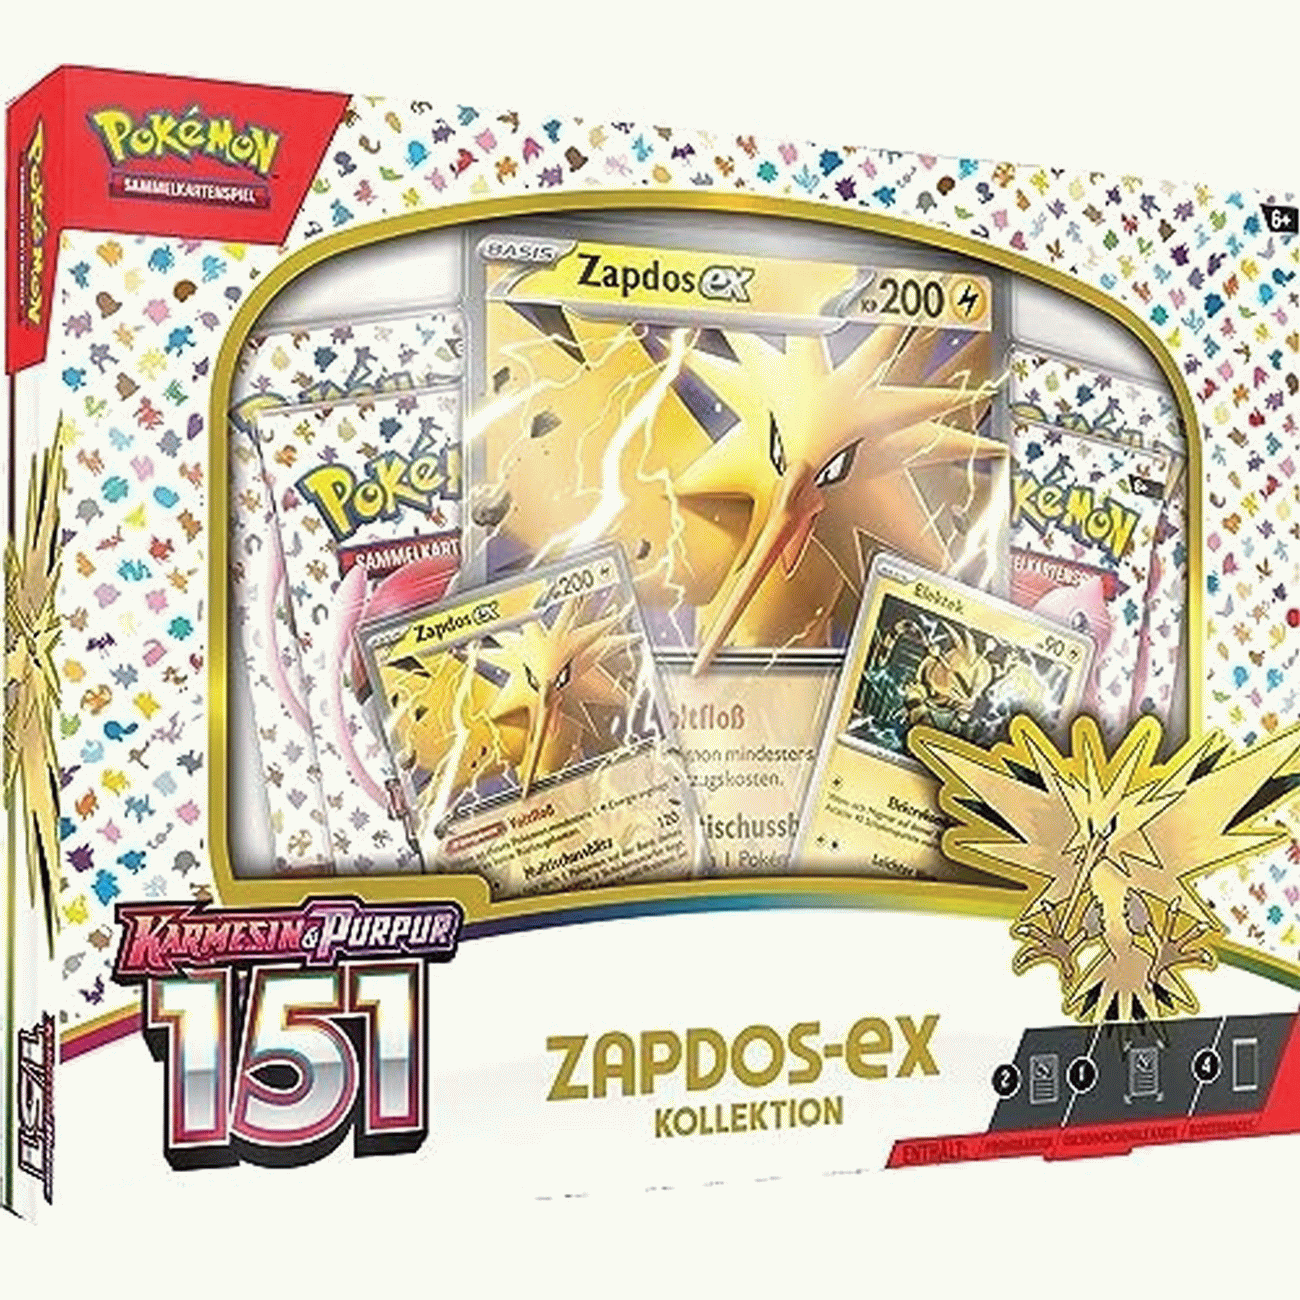 Pokemon Zapdos EX Kollektion - Karmesin und Purpur 151